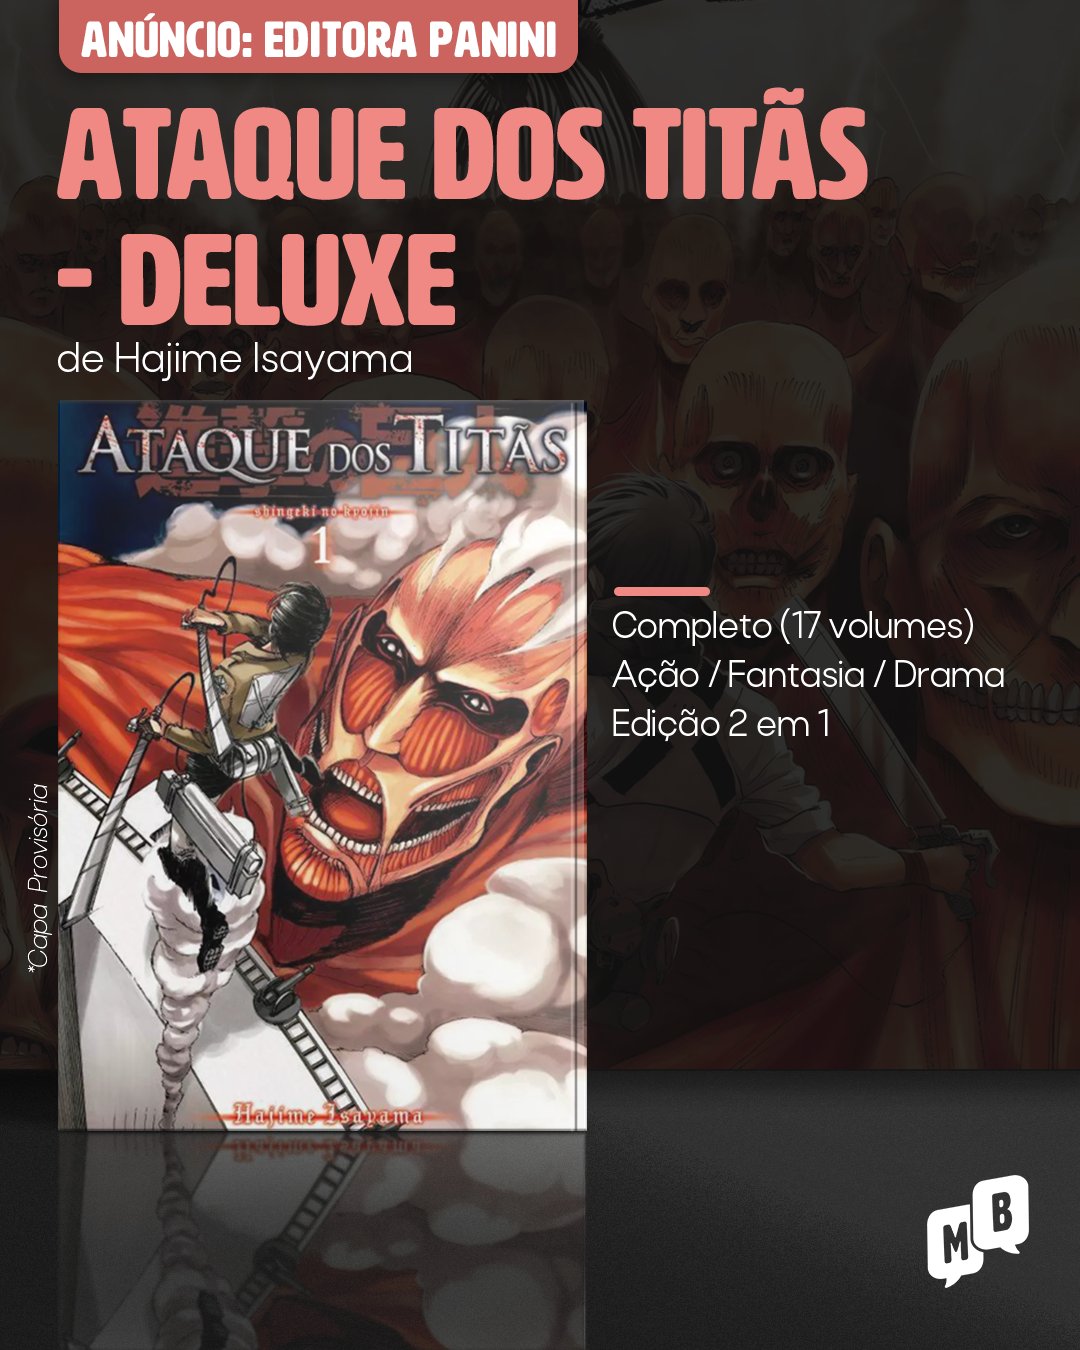 Mangás Brasil on X: A Panini anunciou hoje (15/07), no @animefriends,  mangá Ataque dos Titãs Deluxe. Escrito e ilustrado por Hajime  Isayama,começou a ser publicado em 2009 na Shounen Magazine da Kodansha